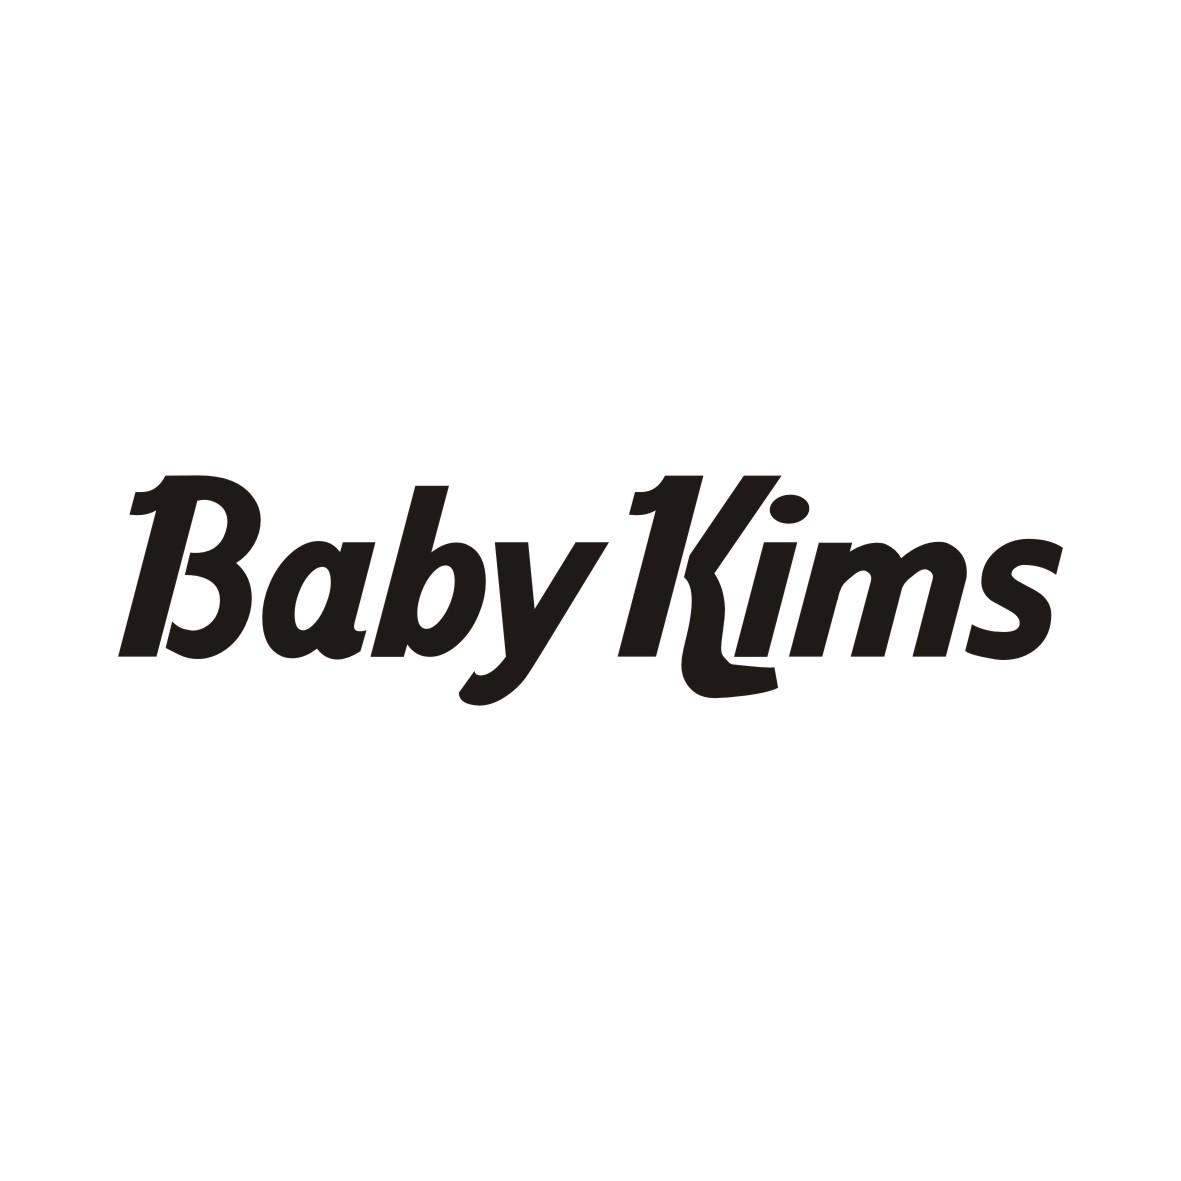 BABY KIMS 商标公告